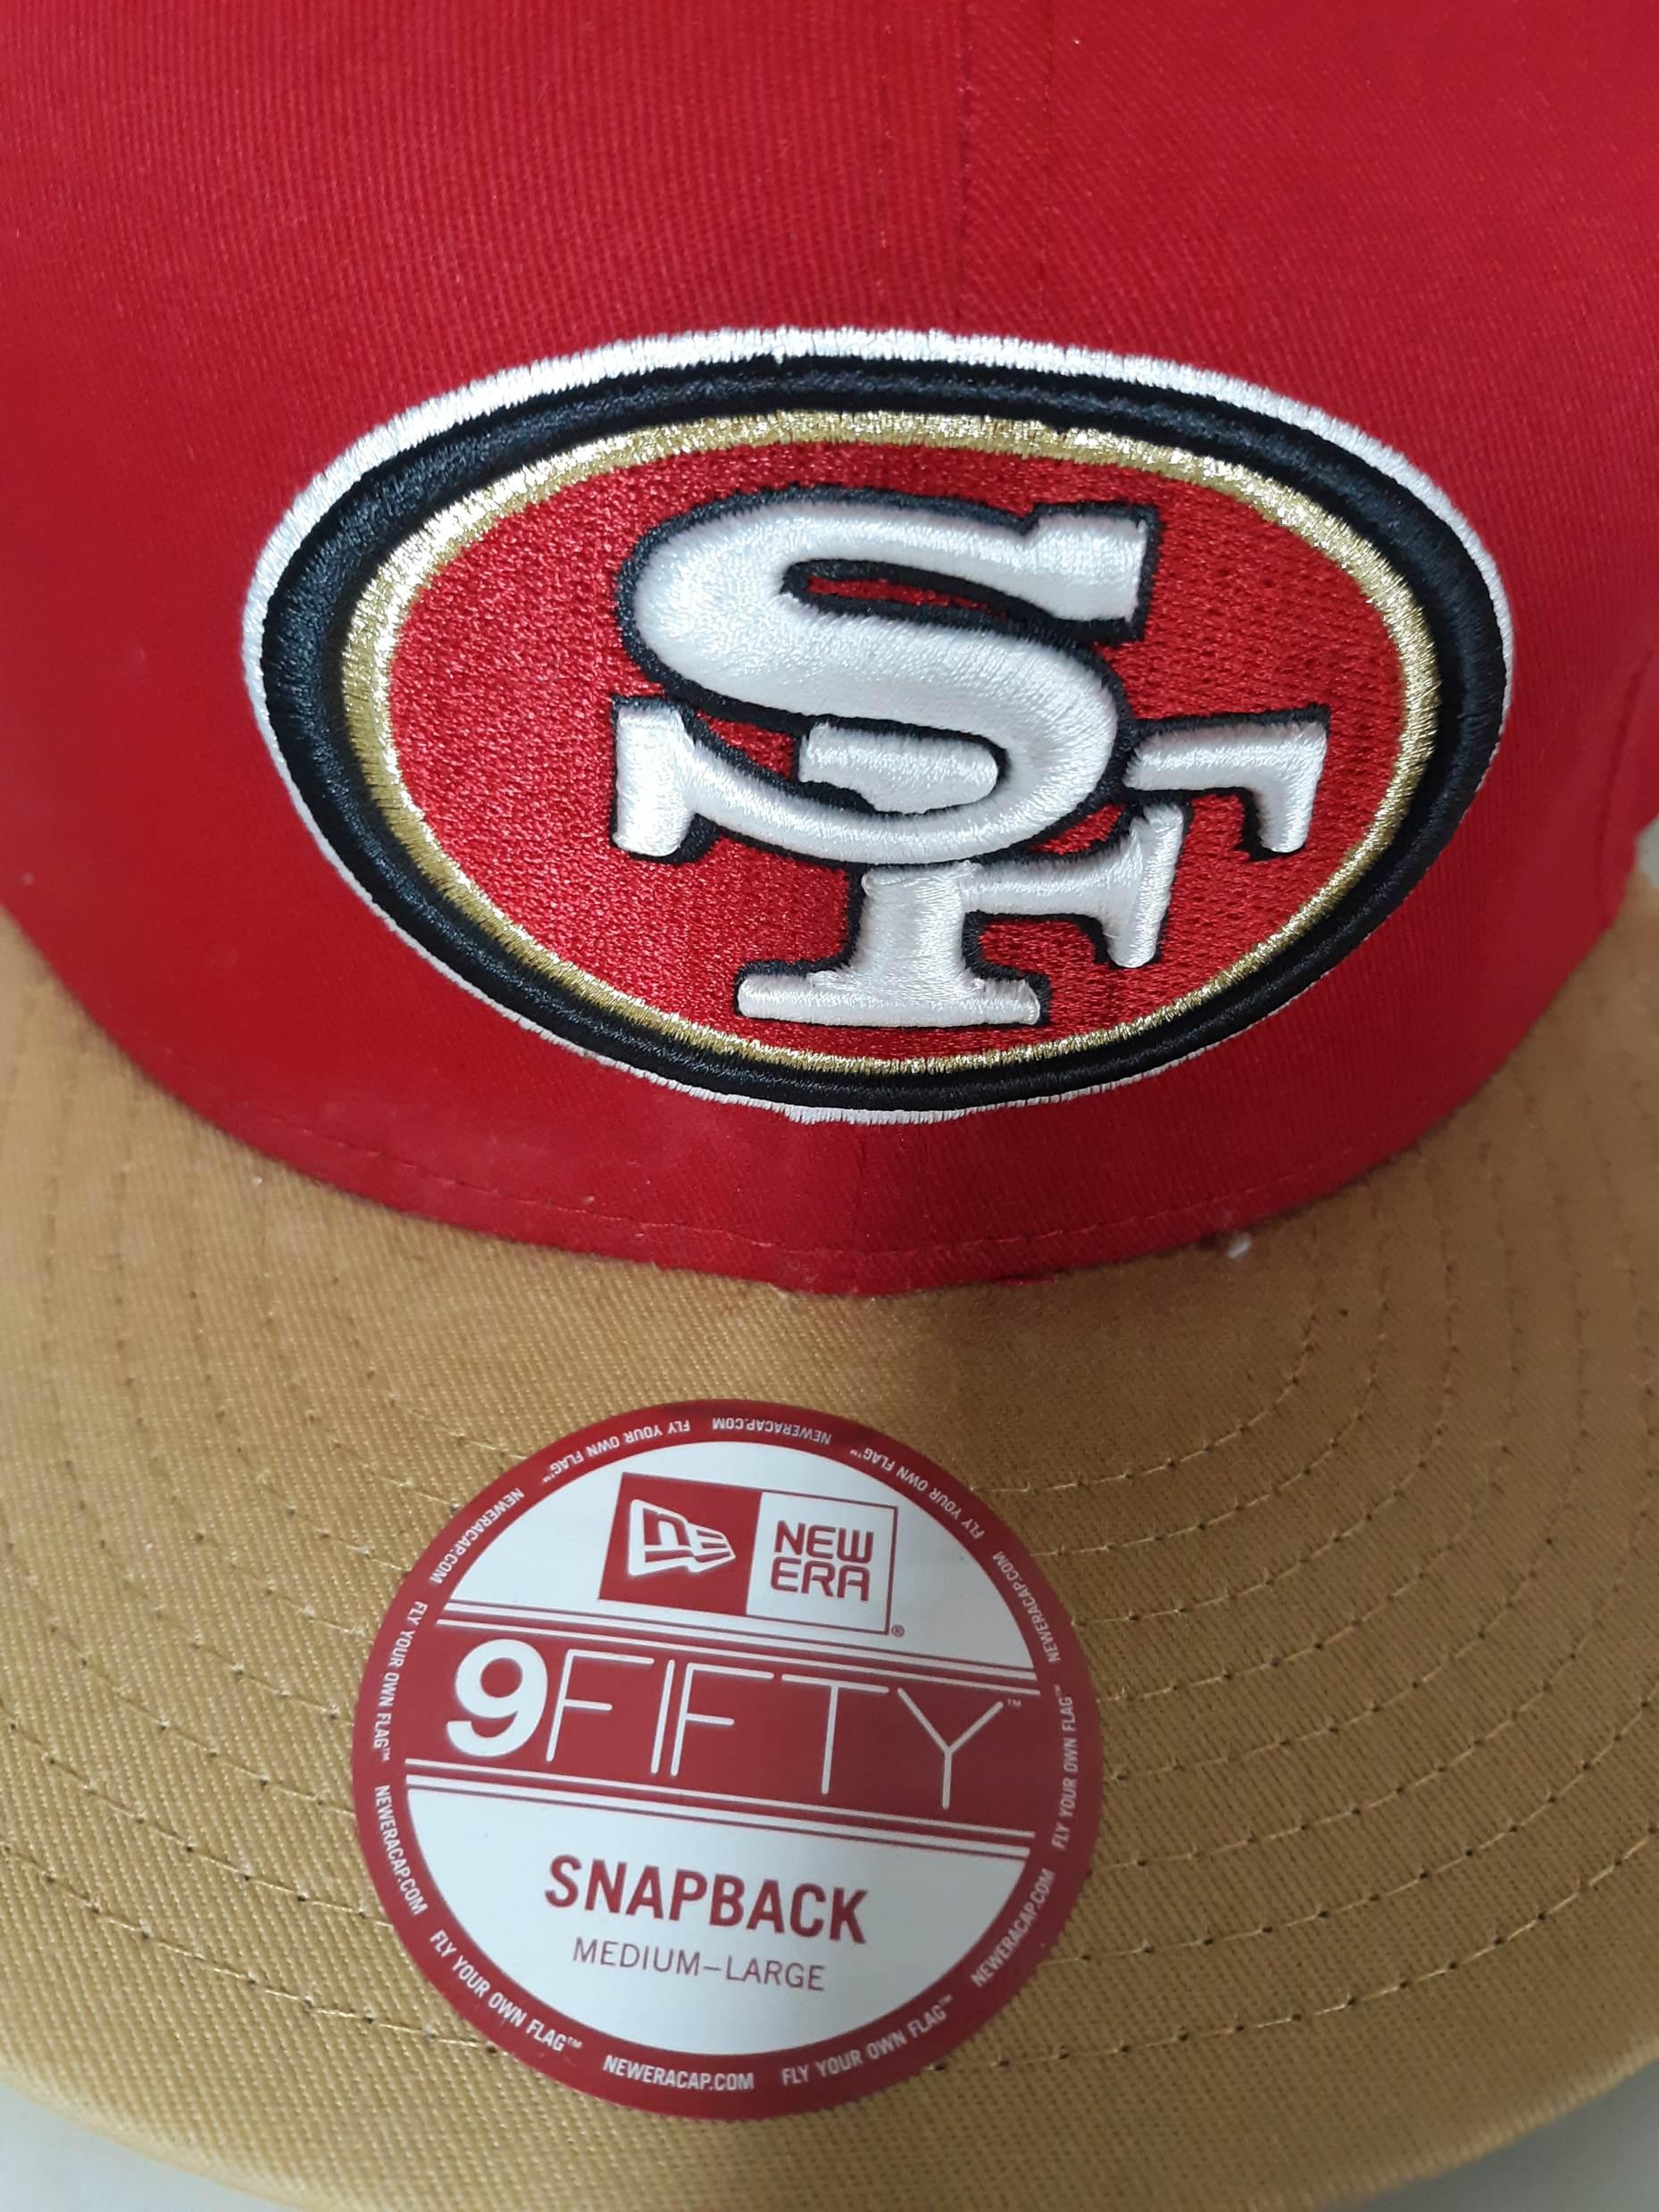 San Francisco 49ers Hat